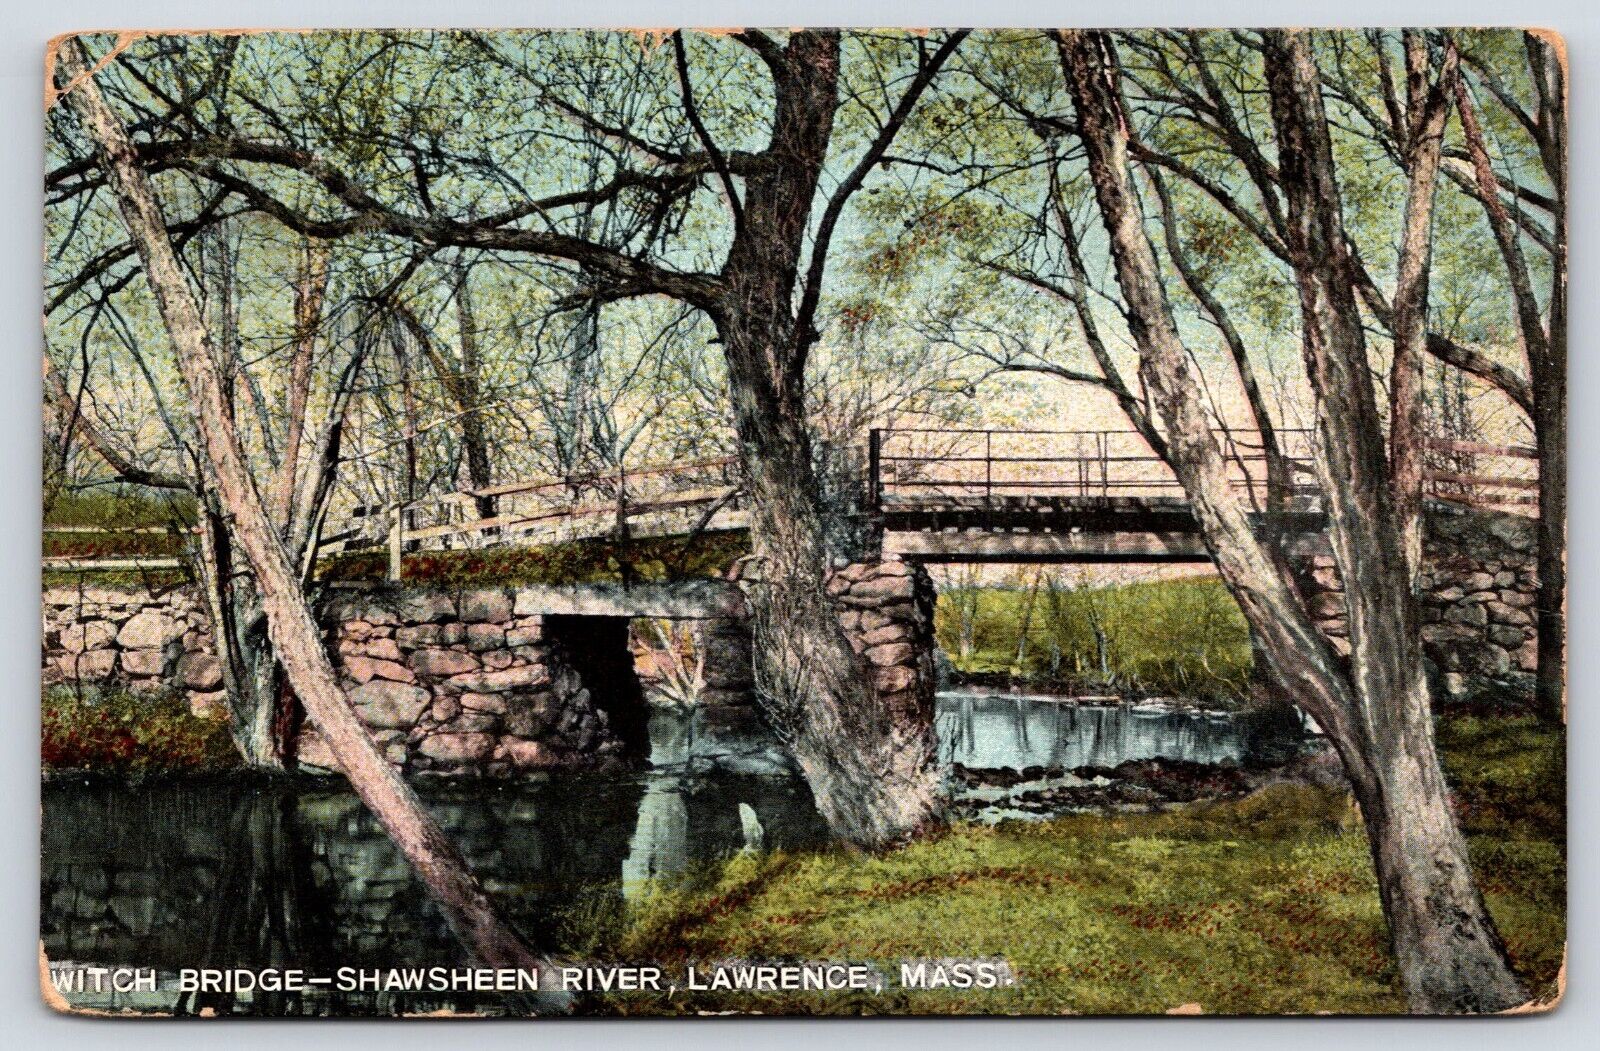 Massachusetts Lawrence Witch Bridge Shawsheen River Vintage Postcard POSTED